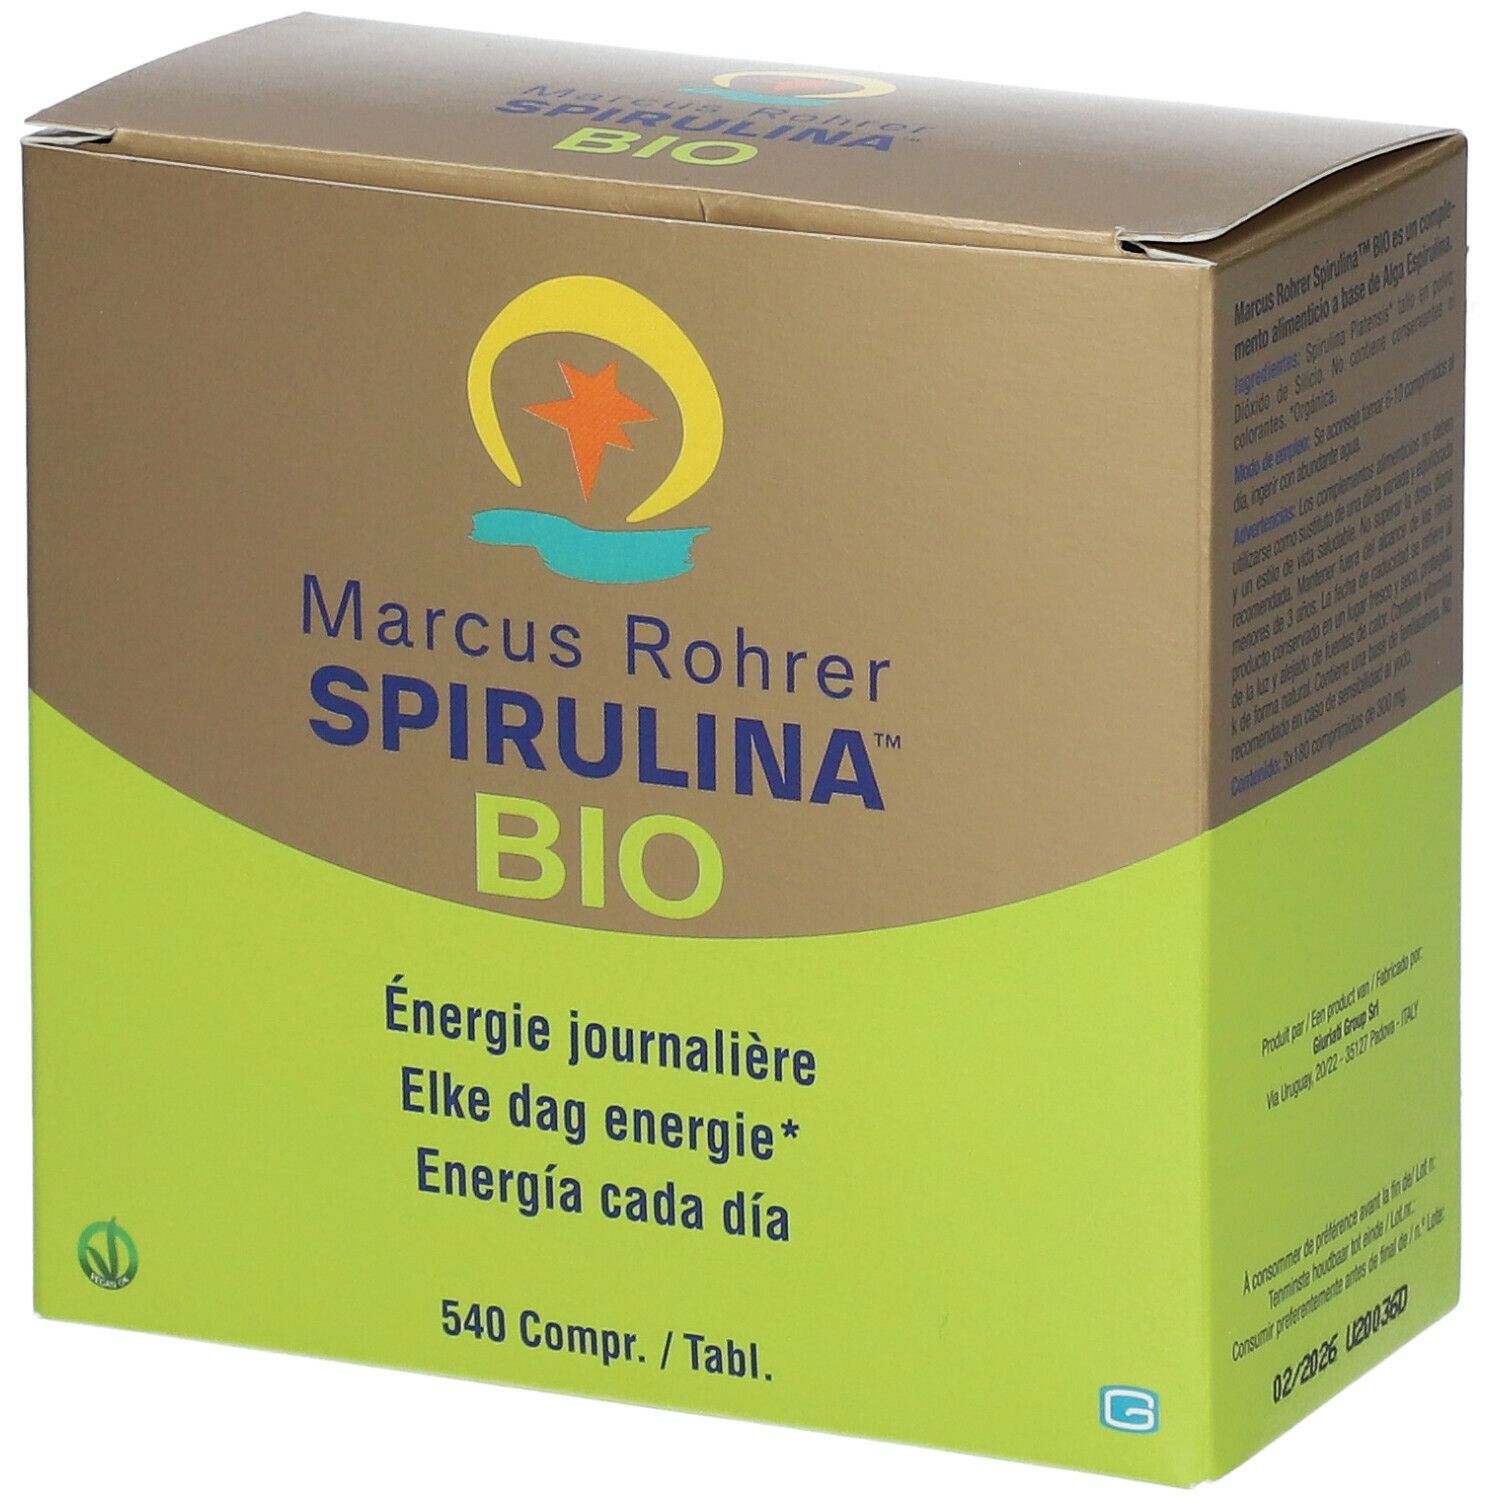 Marcus Rohrer Spirulina® Bio recharge